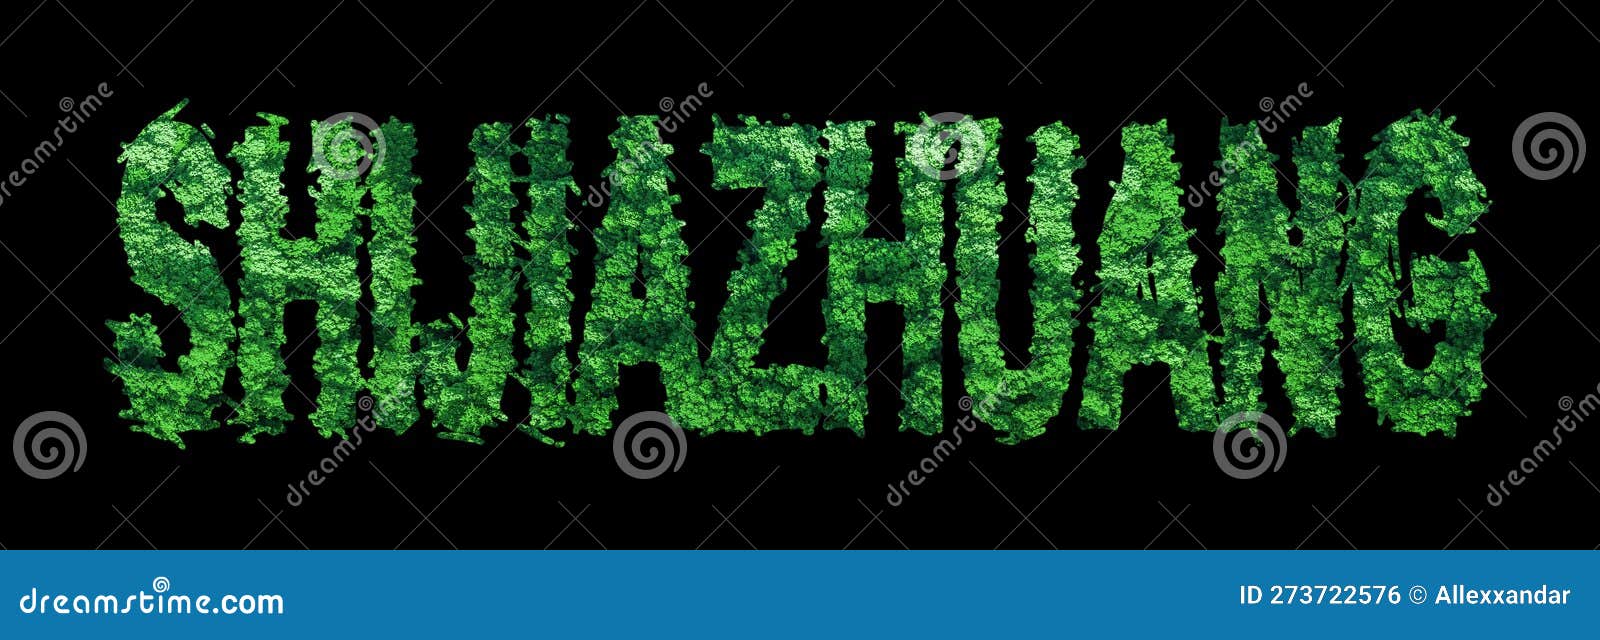 shijiazhuang lettering, shijiazhuang forest ecology concept